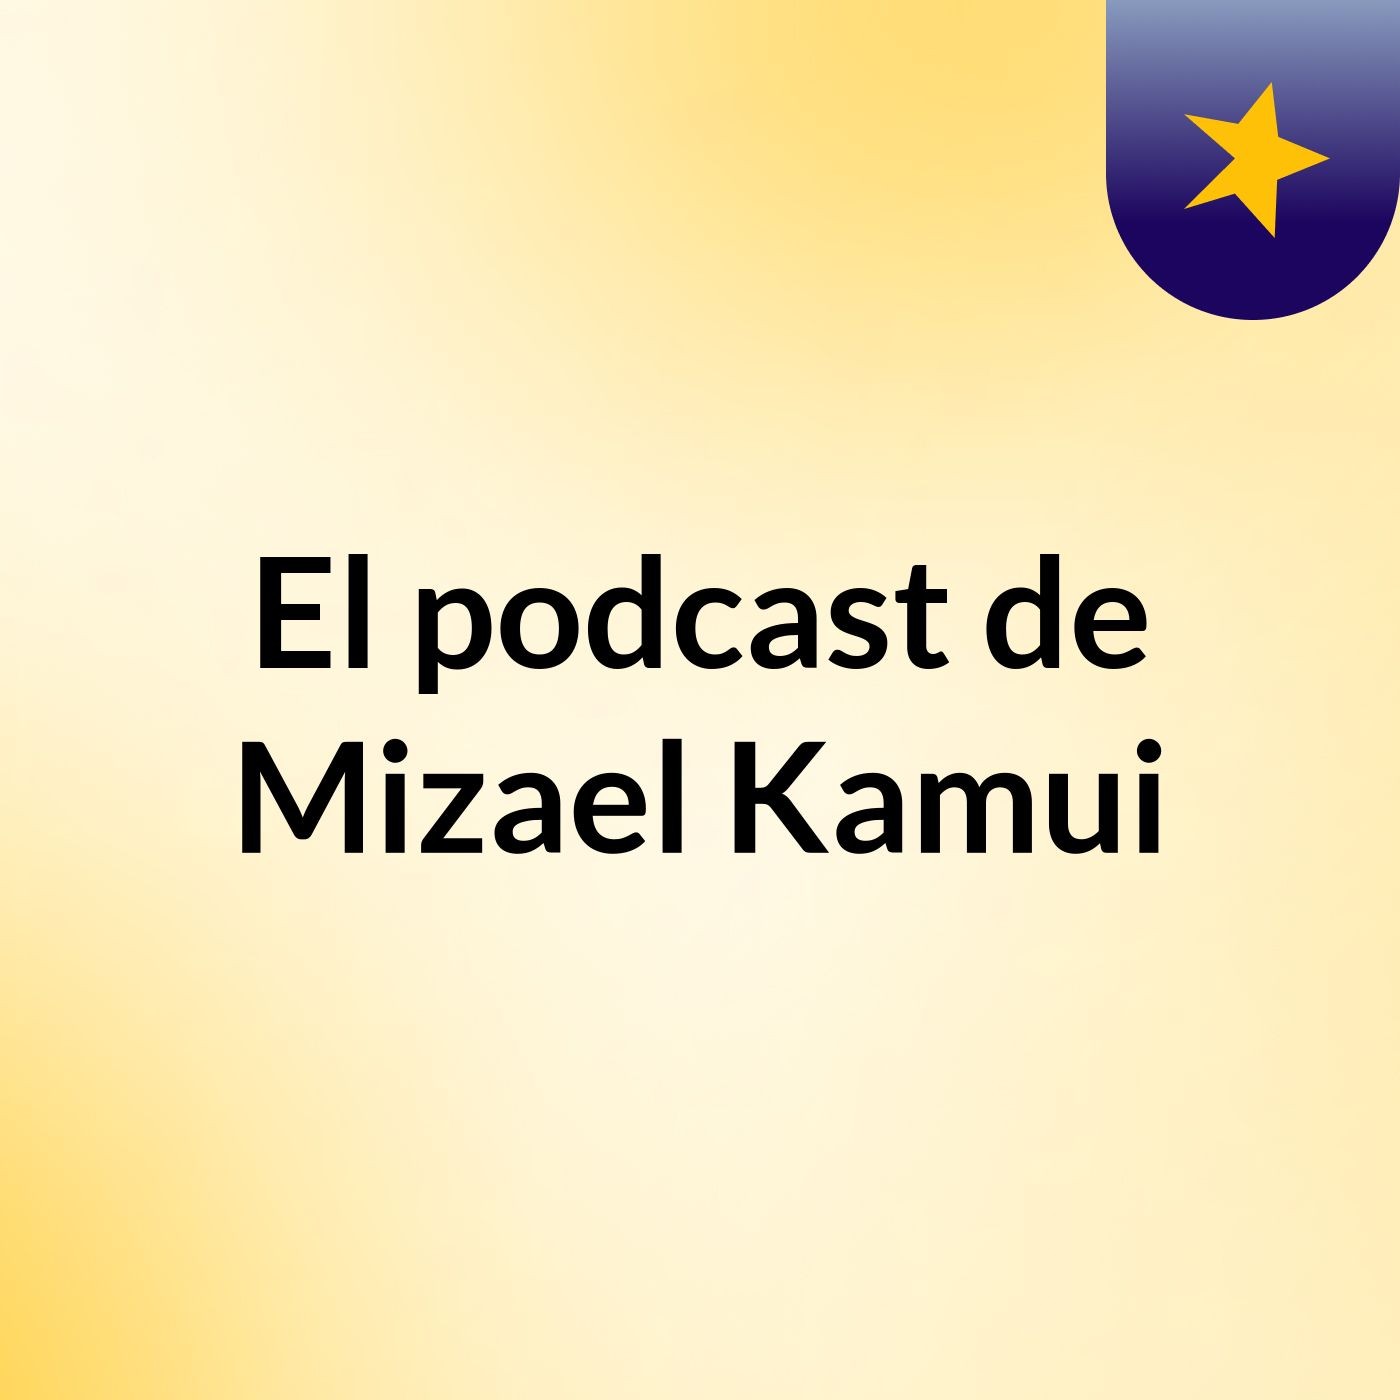 El podcast de Mizael Kamui